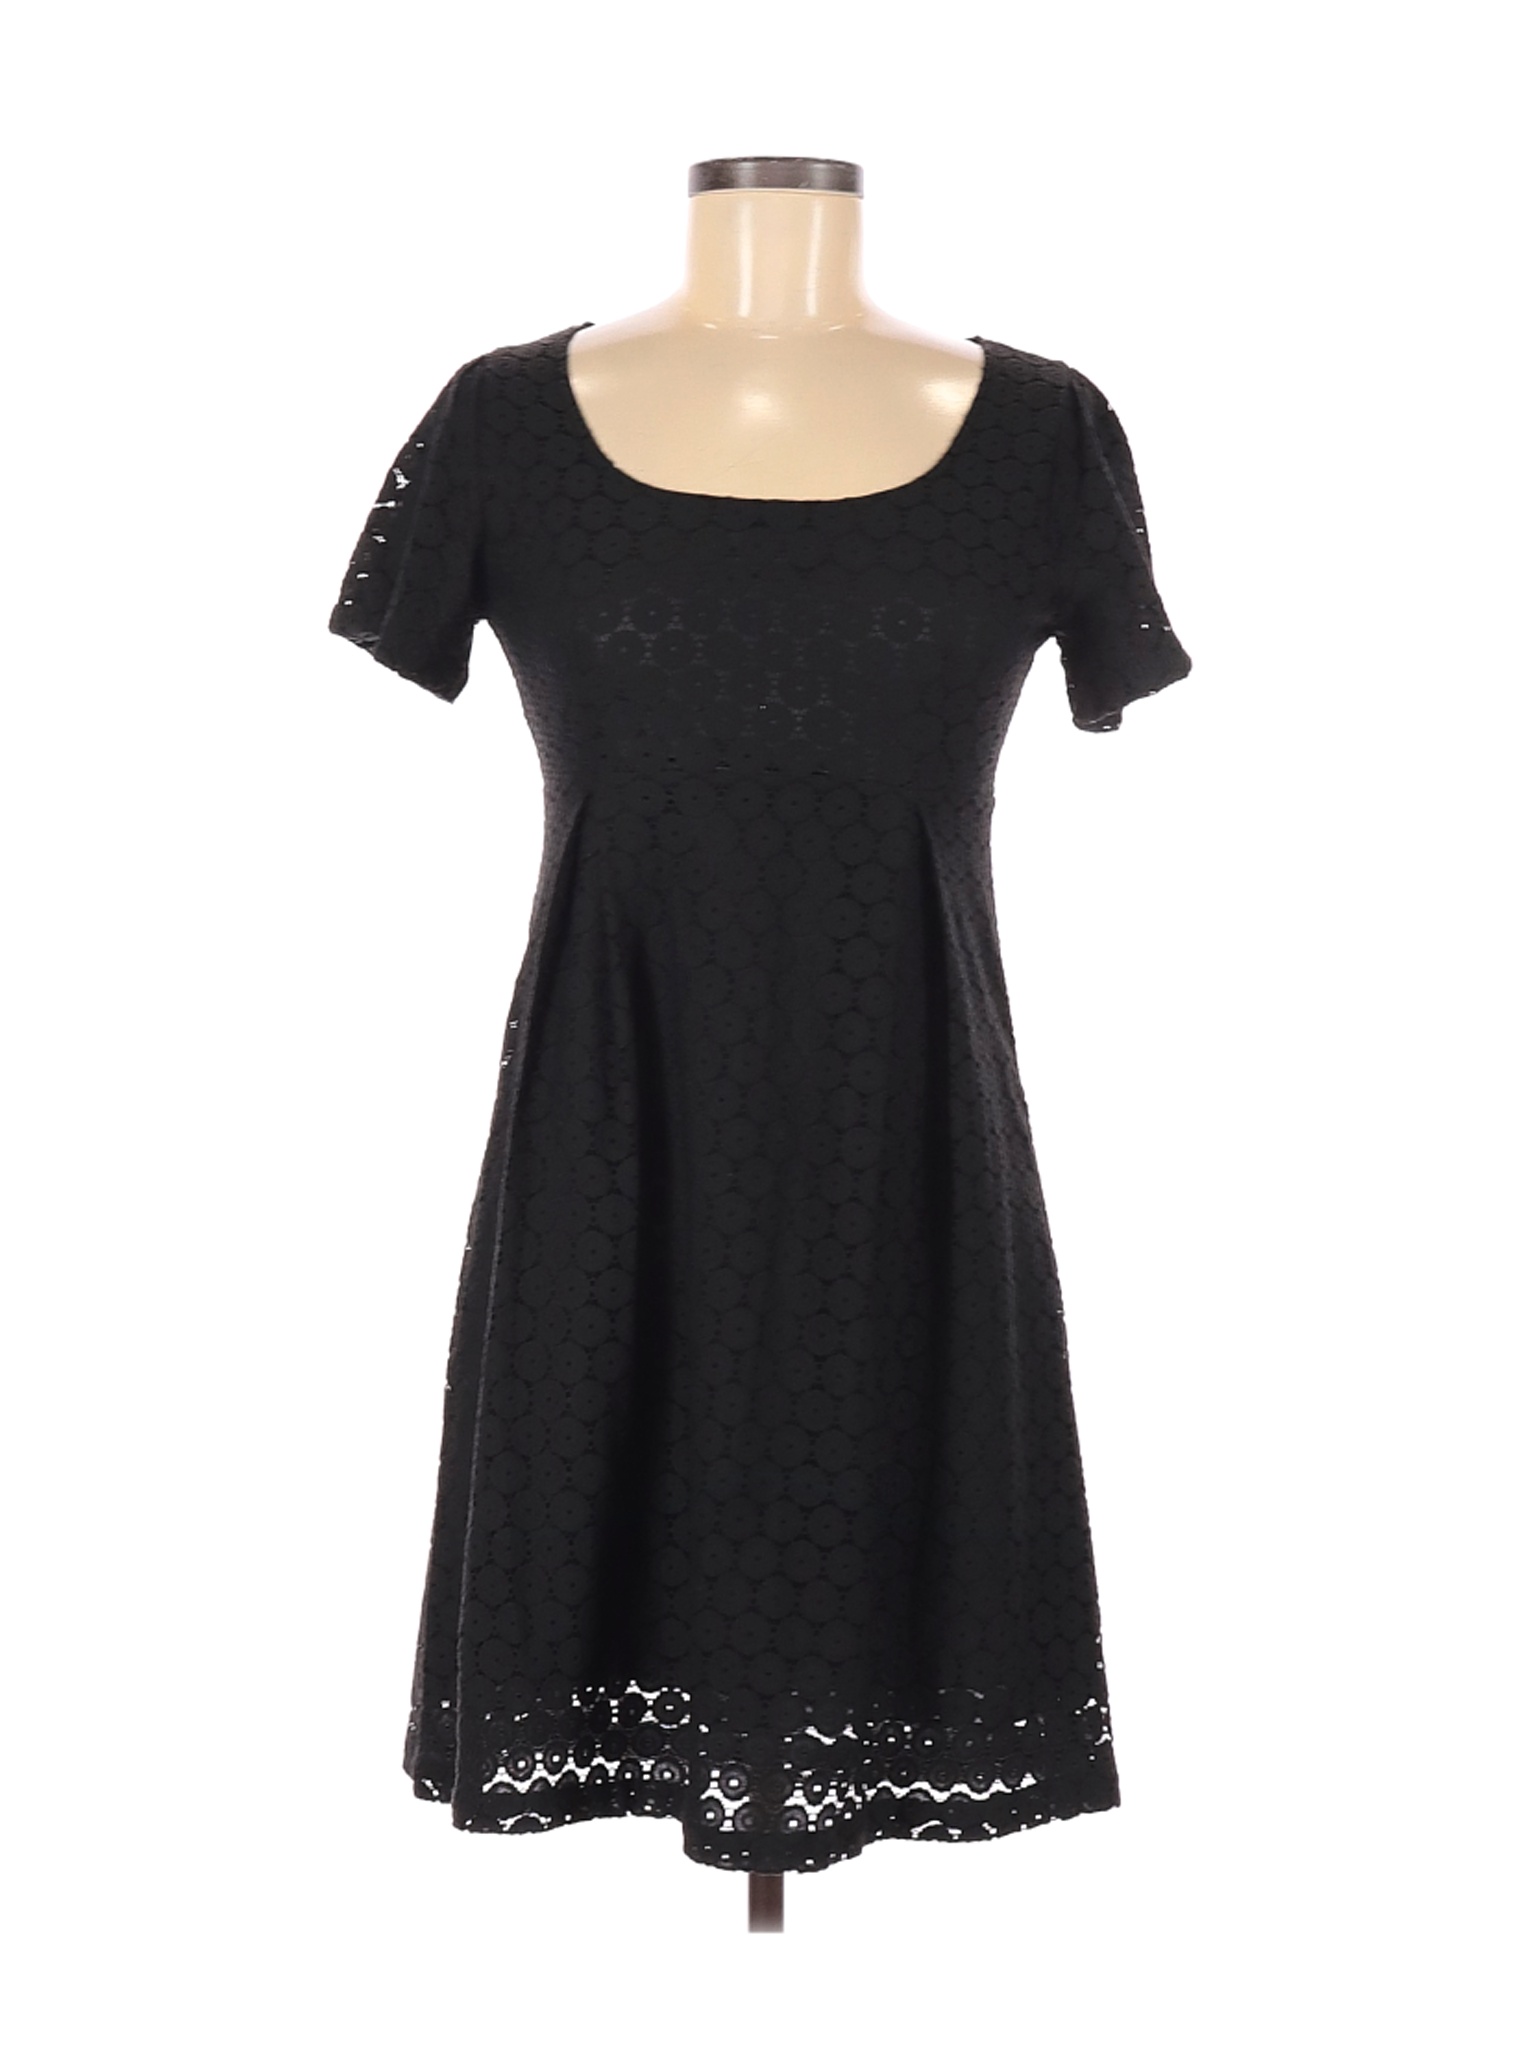 H&M Women Black Casual Dress 6 | eBay